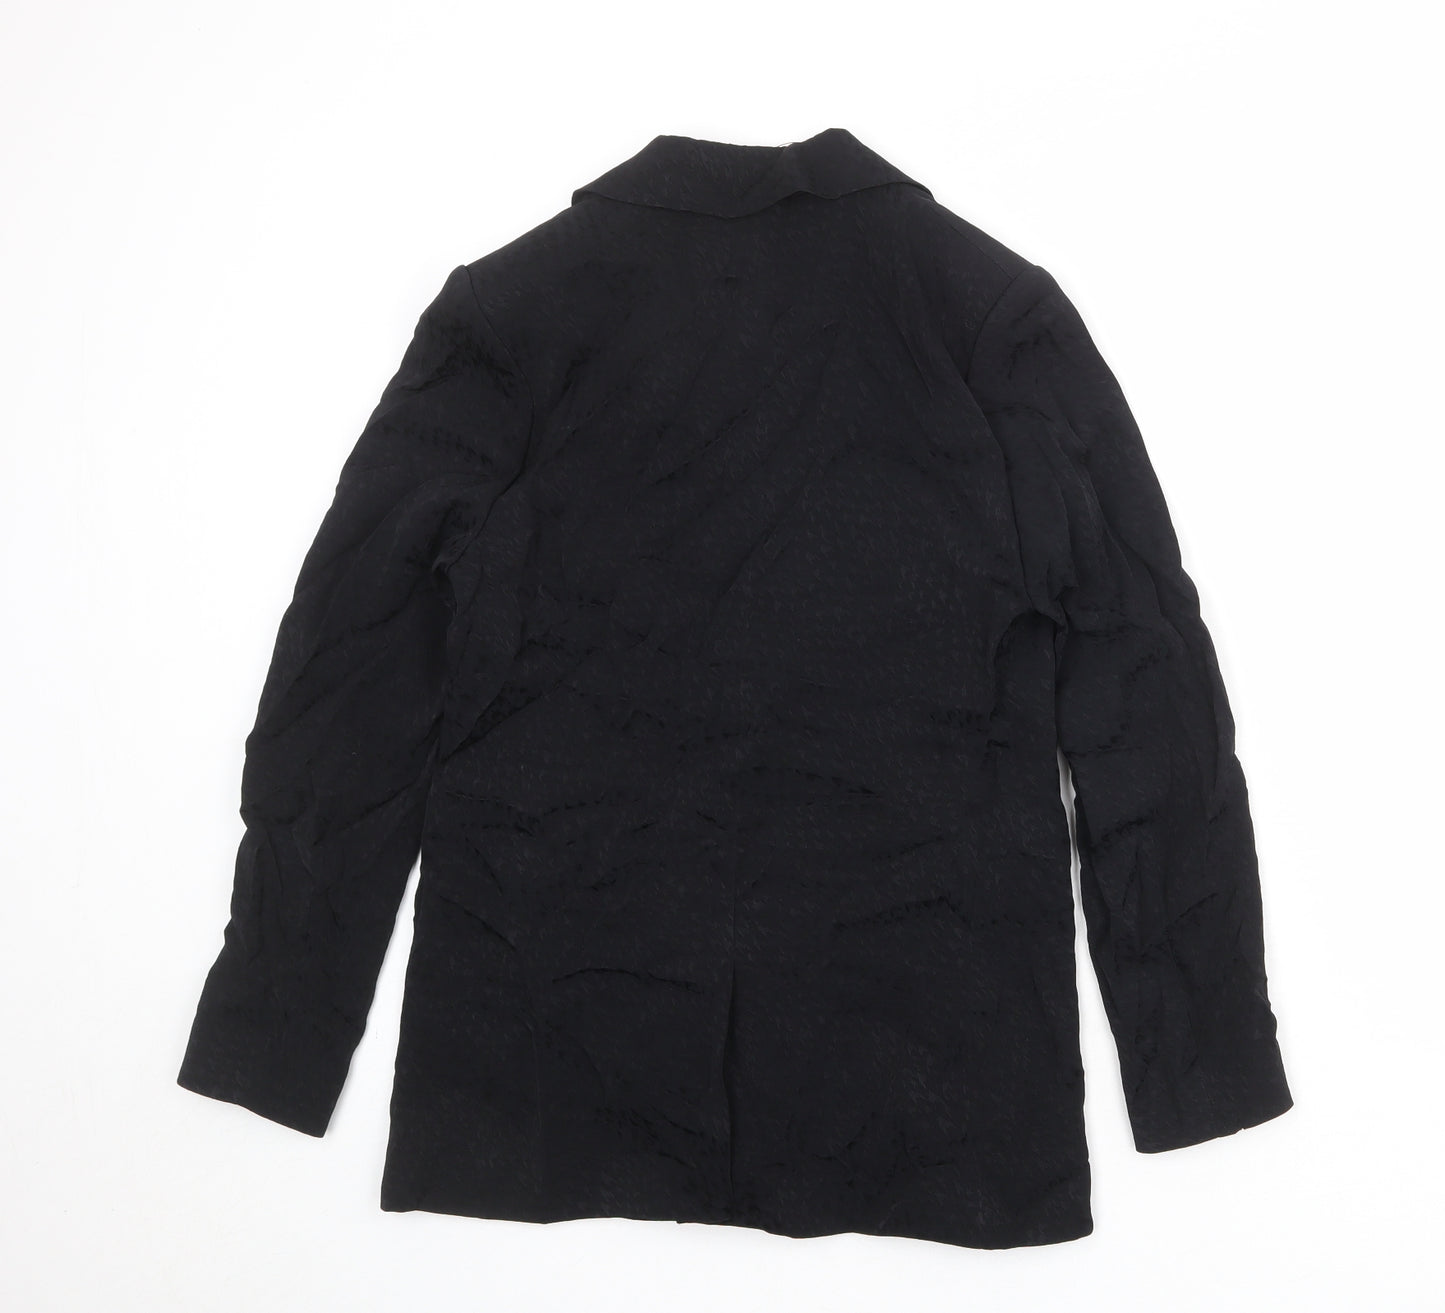 Marks and Spencer Womens Black Viscose Jacket Suit Jacket Size 8